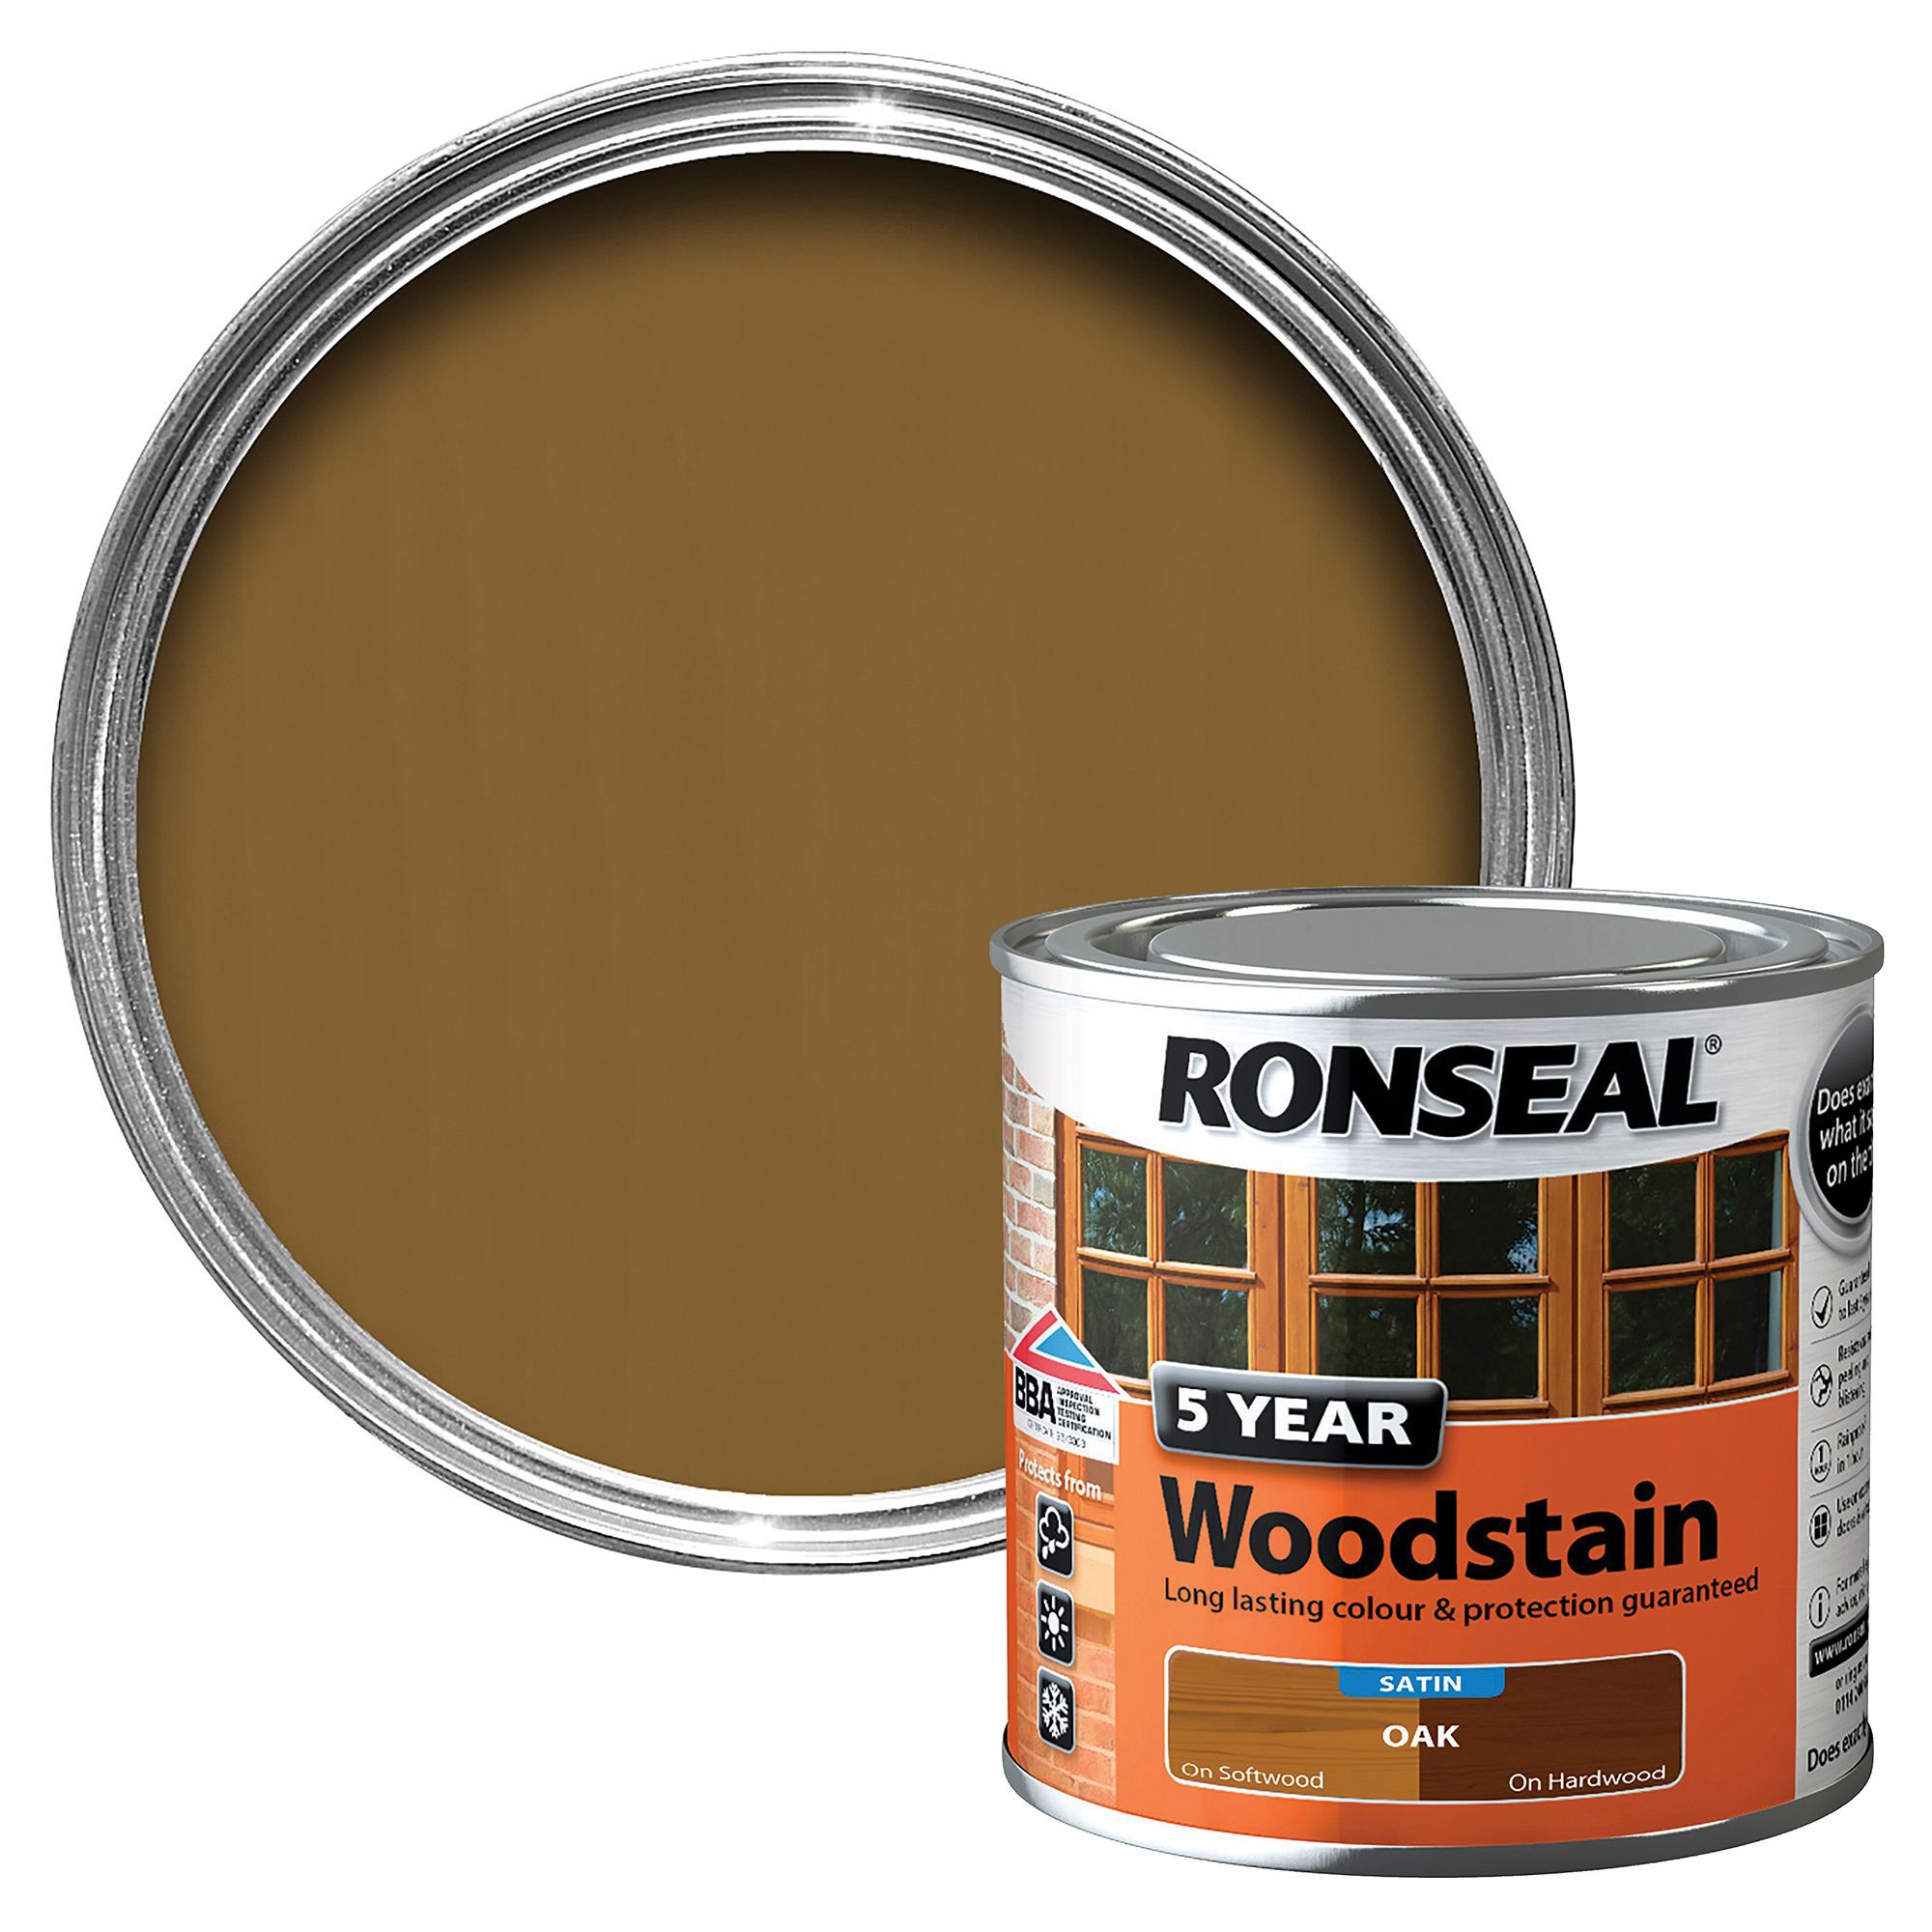 Ronseal Oak High satin sheen Wood stain, 250